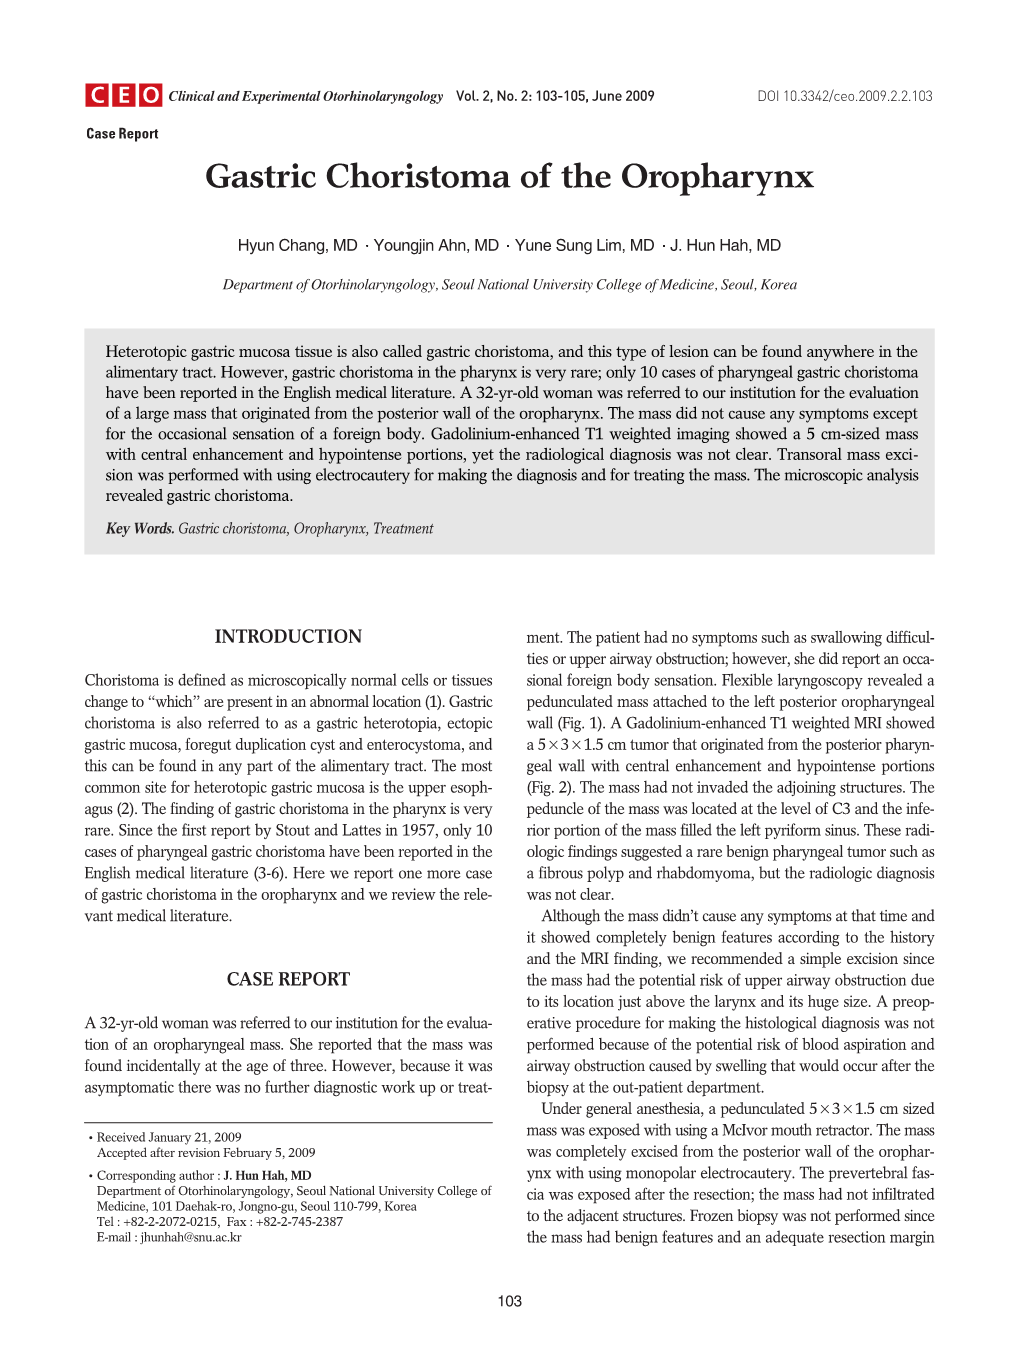 Gastric Choristoma of the Oropharynx